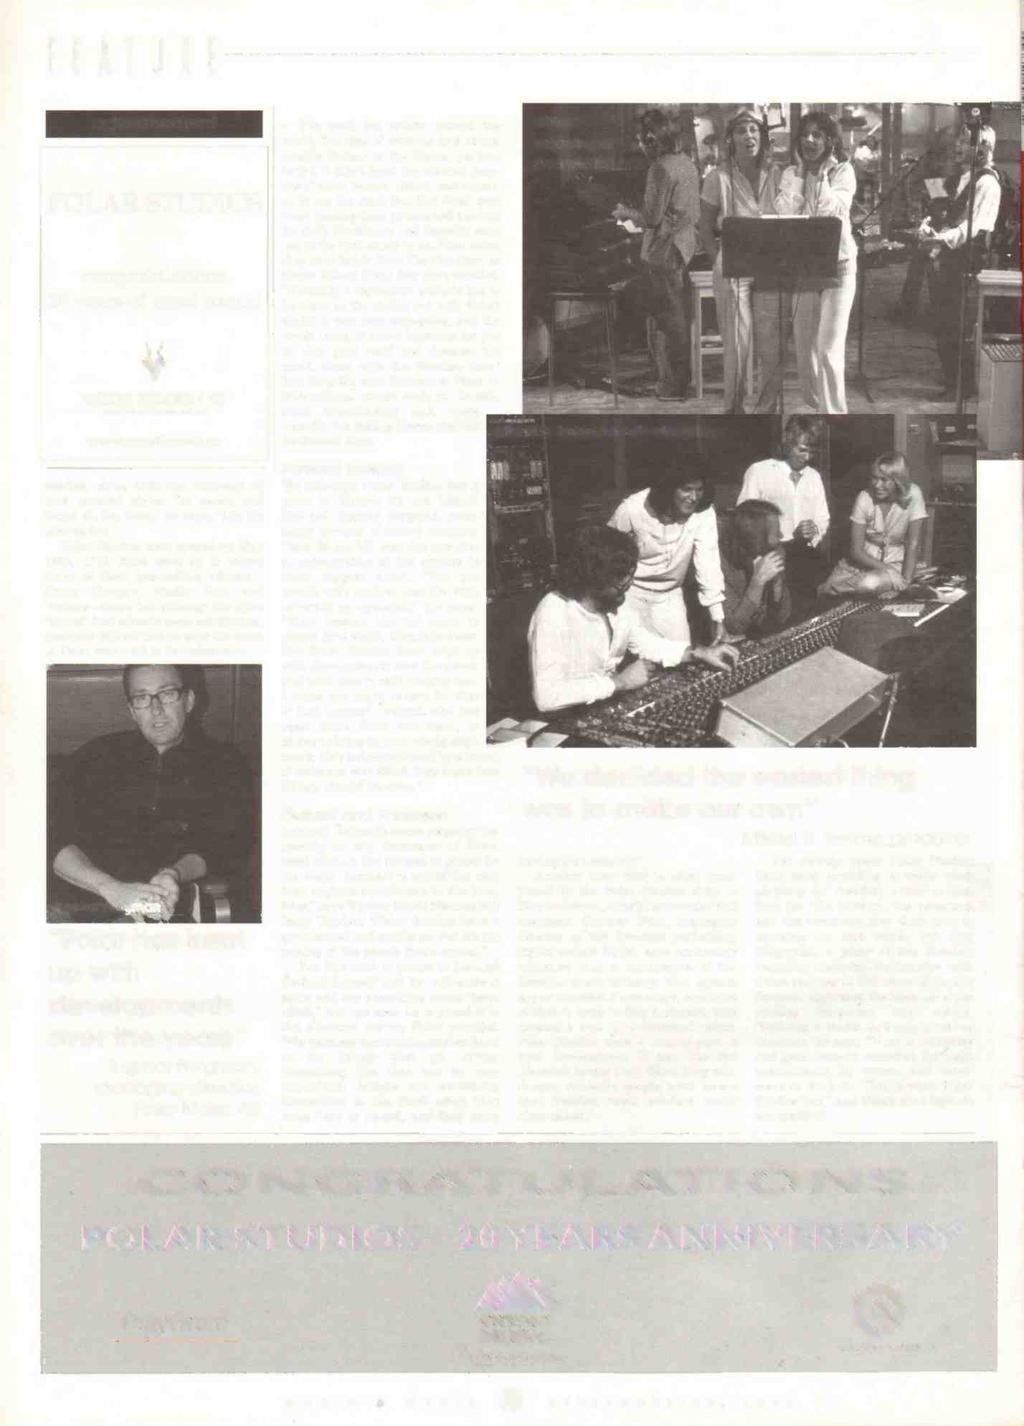 FEATURE advertisement POLAR STUDIOS congratulations 20 years of great sound GAZELL RECOMJ AD RECORDINGS OF FINE MUSIC SINCE 1999 www.gazellmusic.